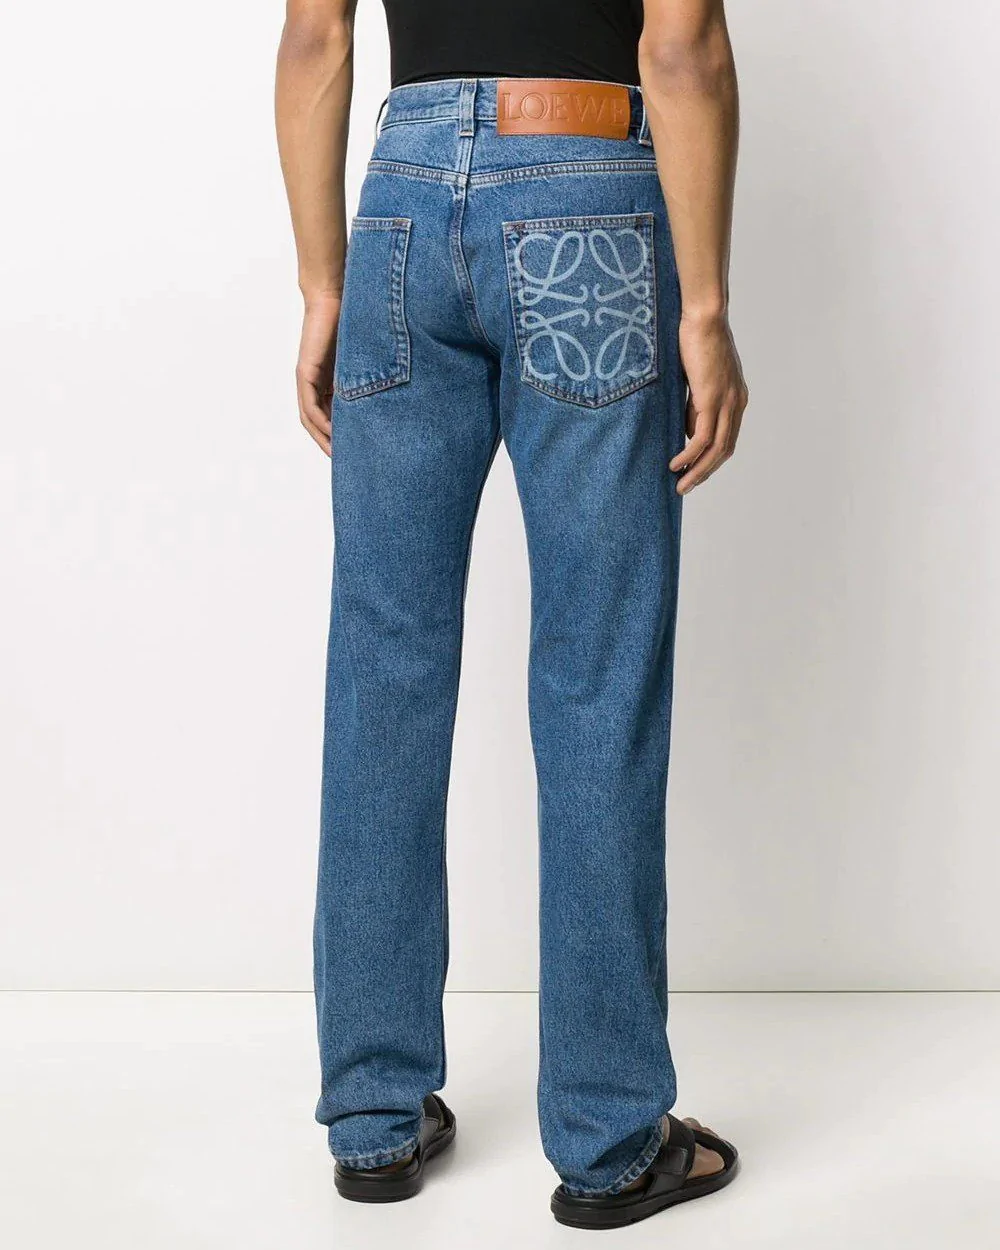 Loewe Men's Basic Denim Jeans